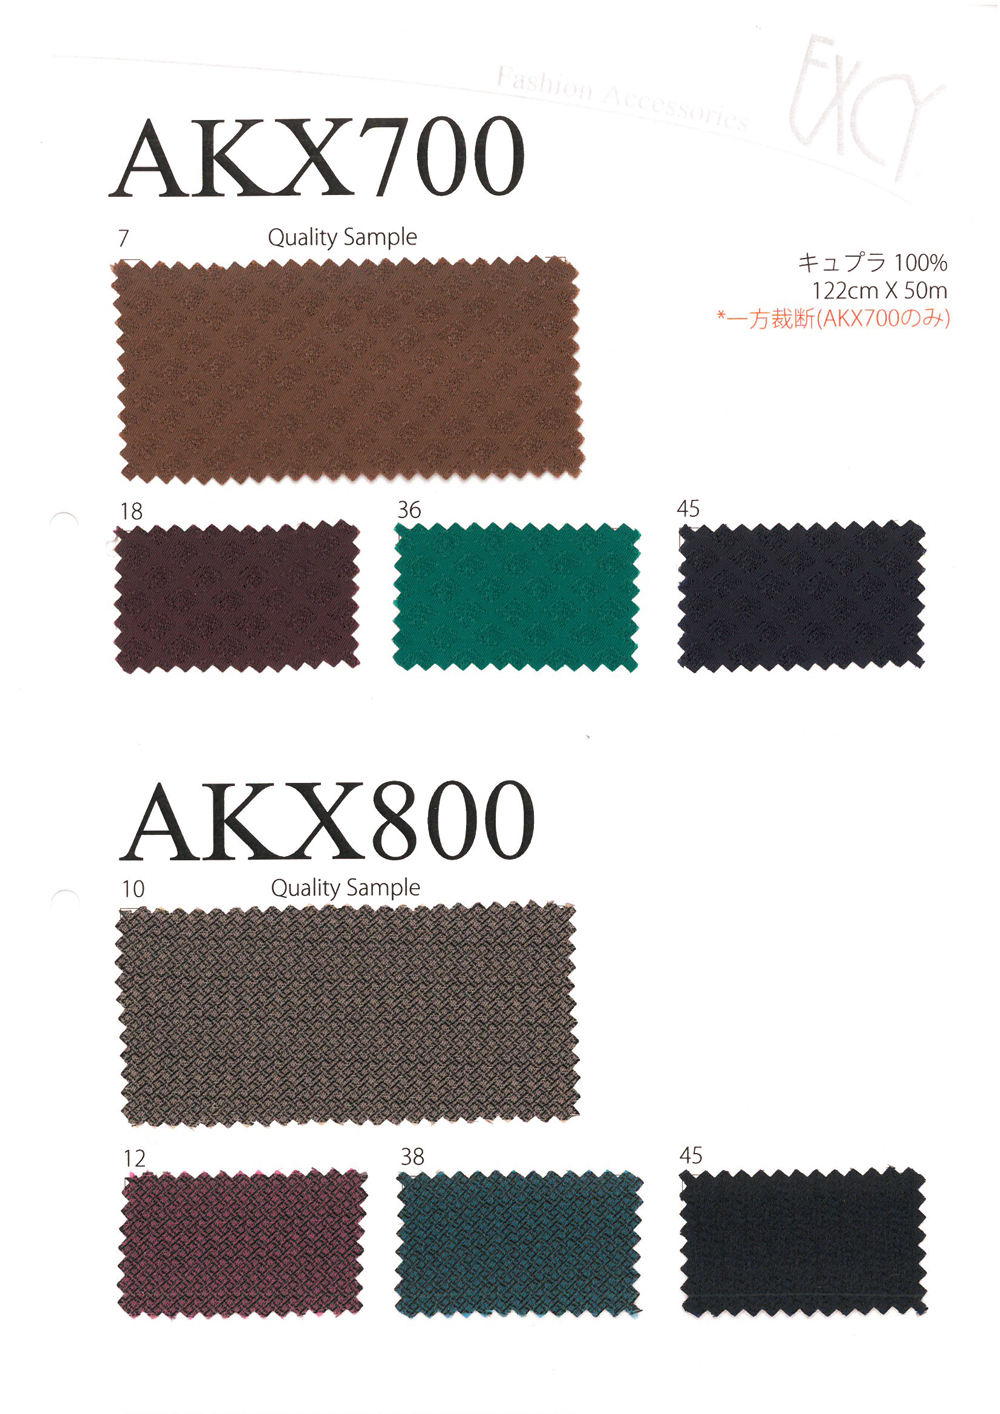 AKX700 Forro De Jacquard De Lujo Con Patrón De Mosaico[Recubrimiento] Asahi KASEI